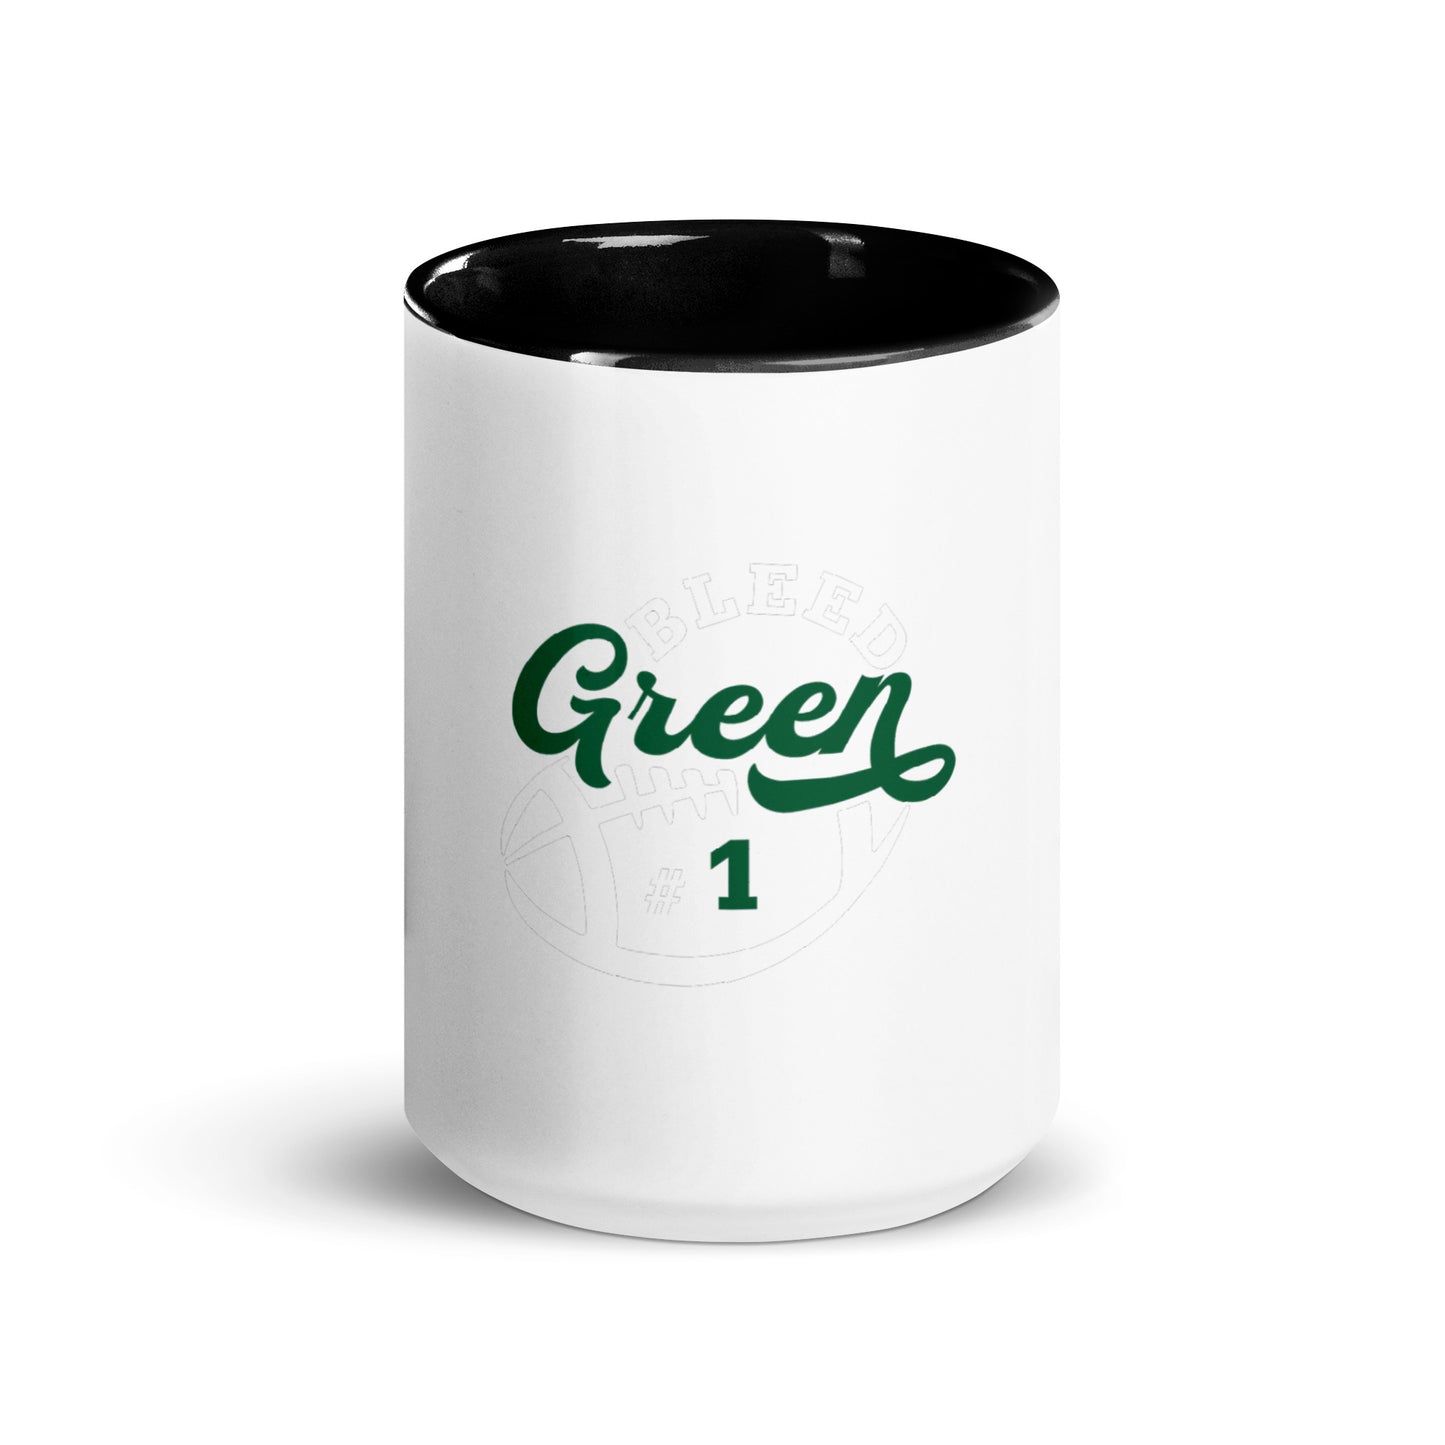 Bleed Green #1 Mug with Color Inside